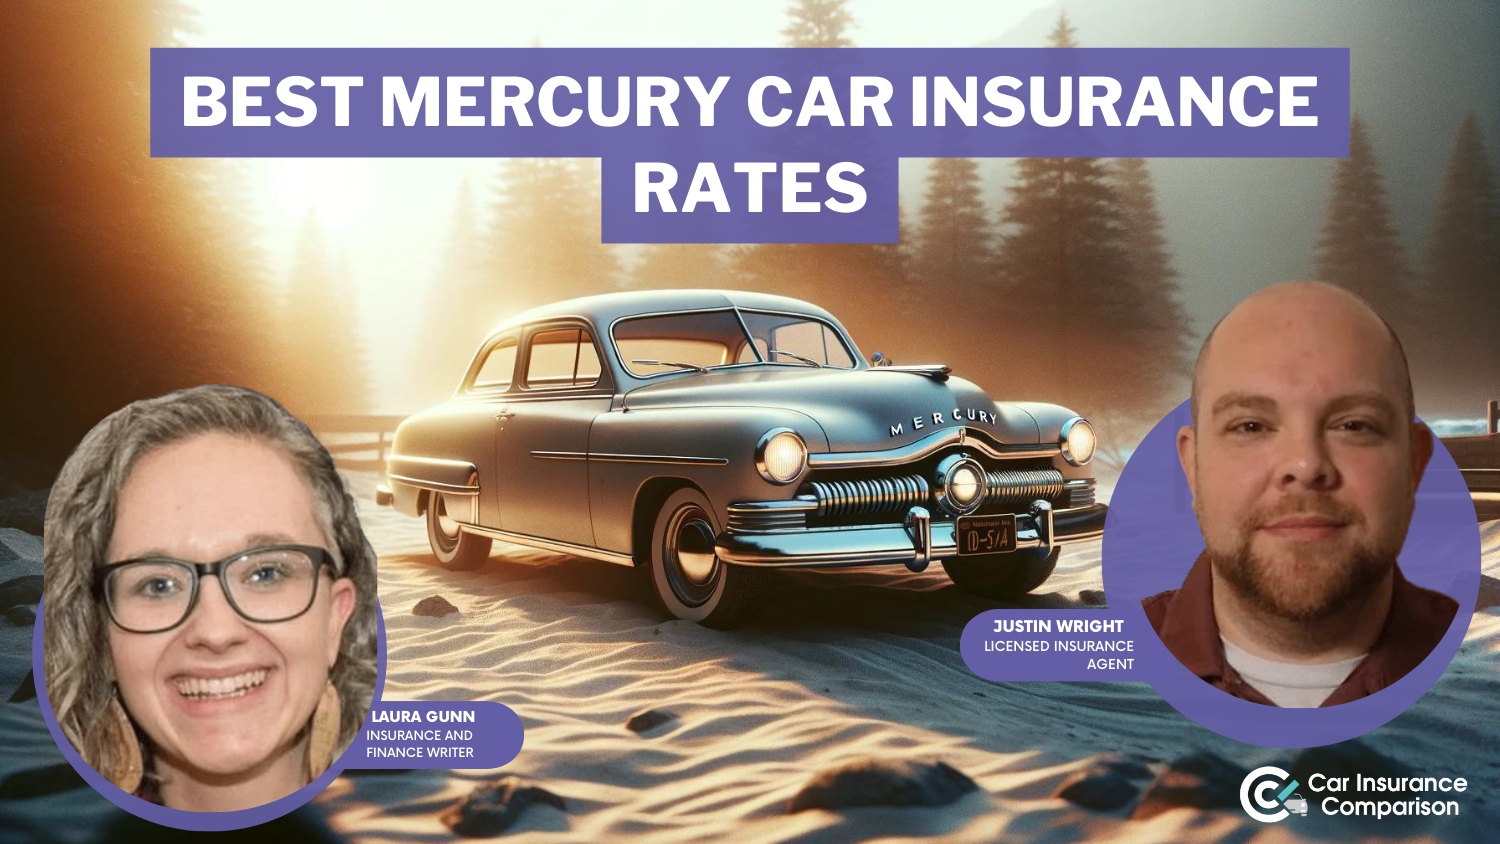 Best Mercury Car Insurance Rates: Allstate, Progressive, Geico